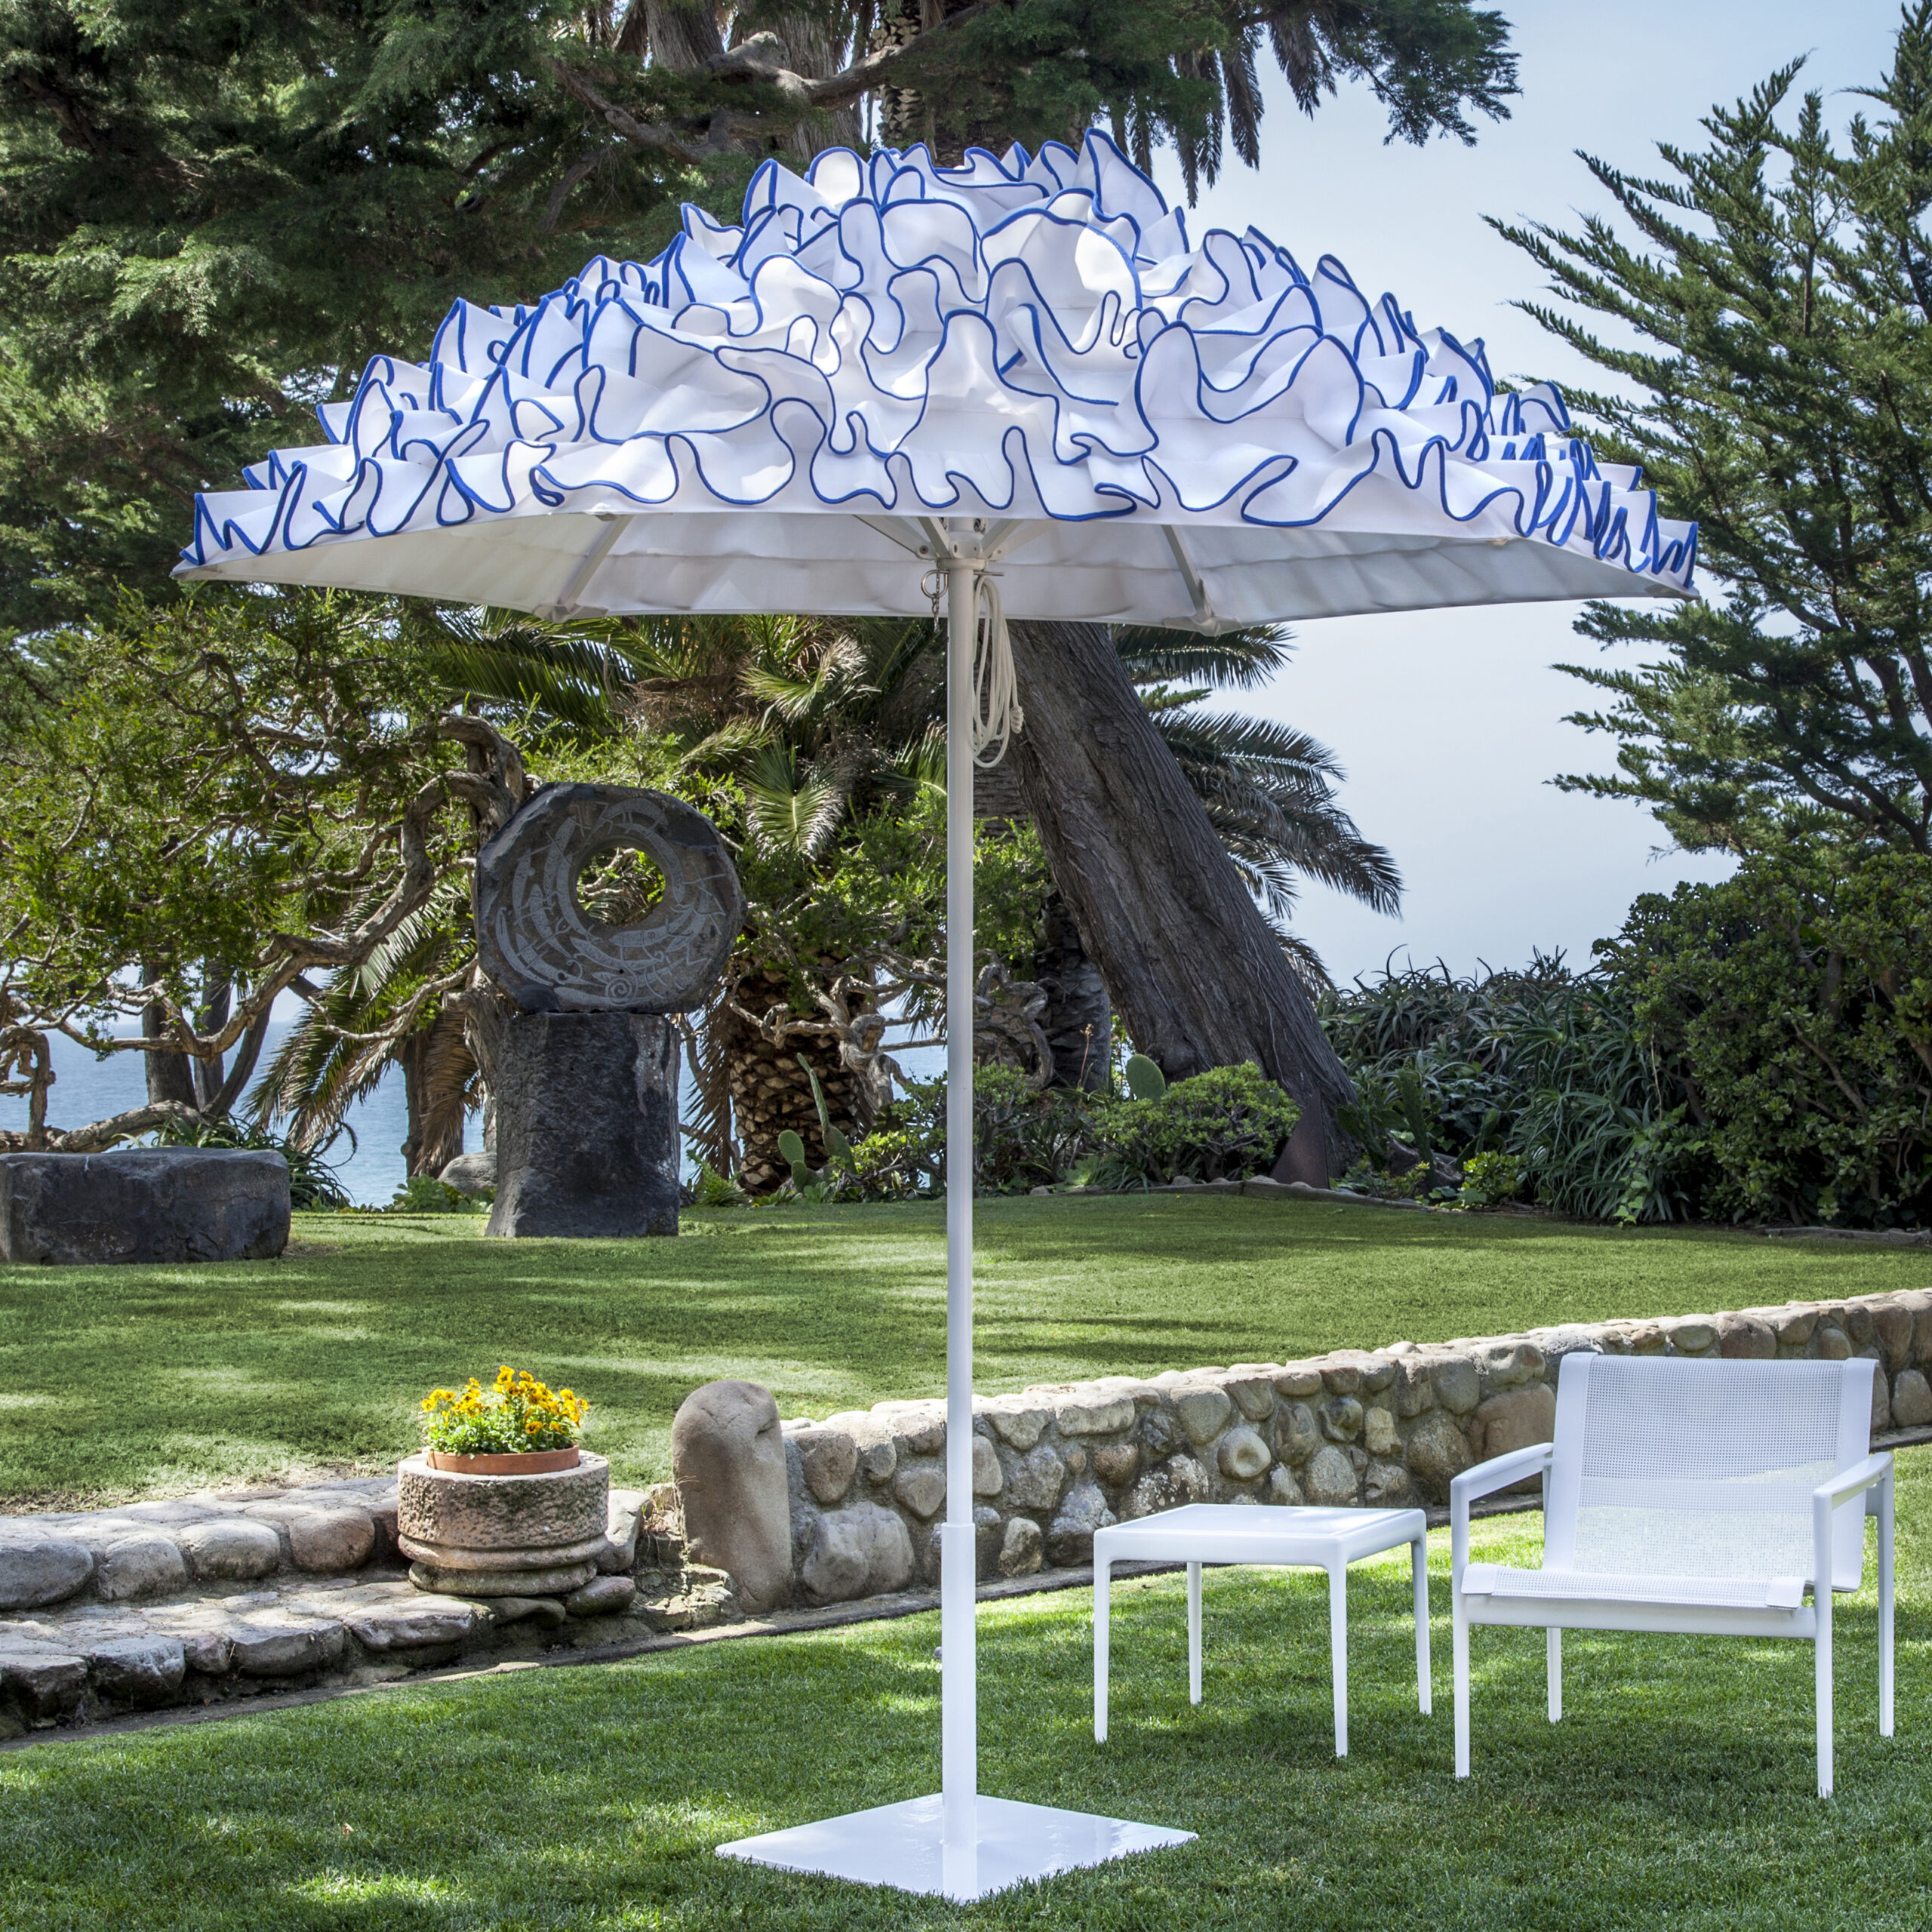 Image of umbrella and furniture